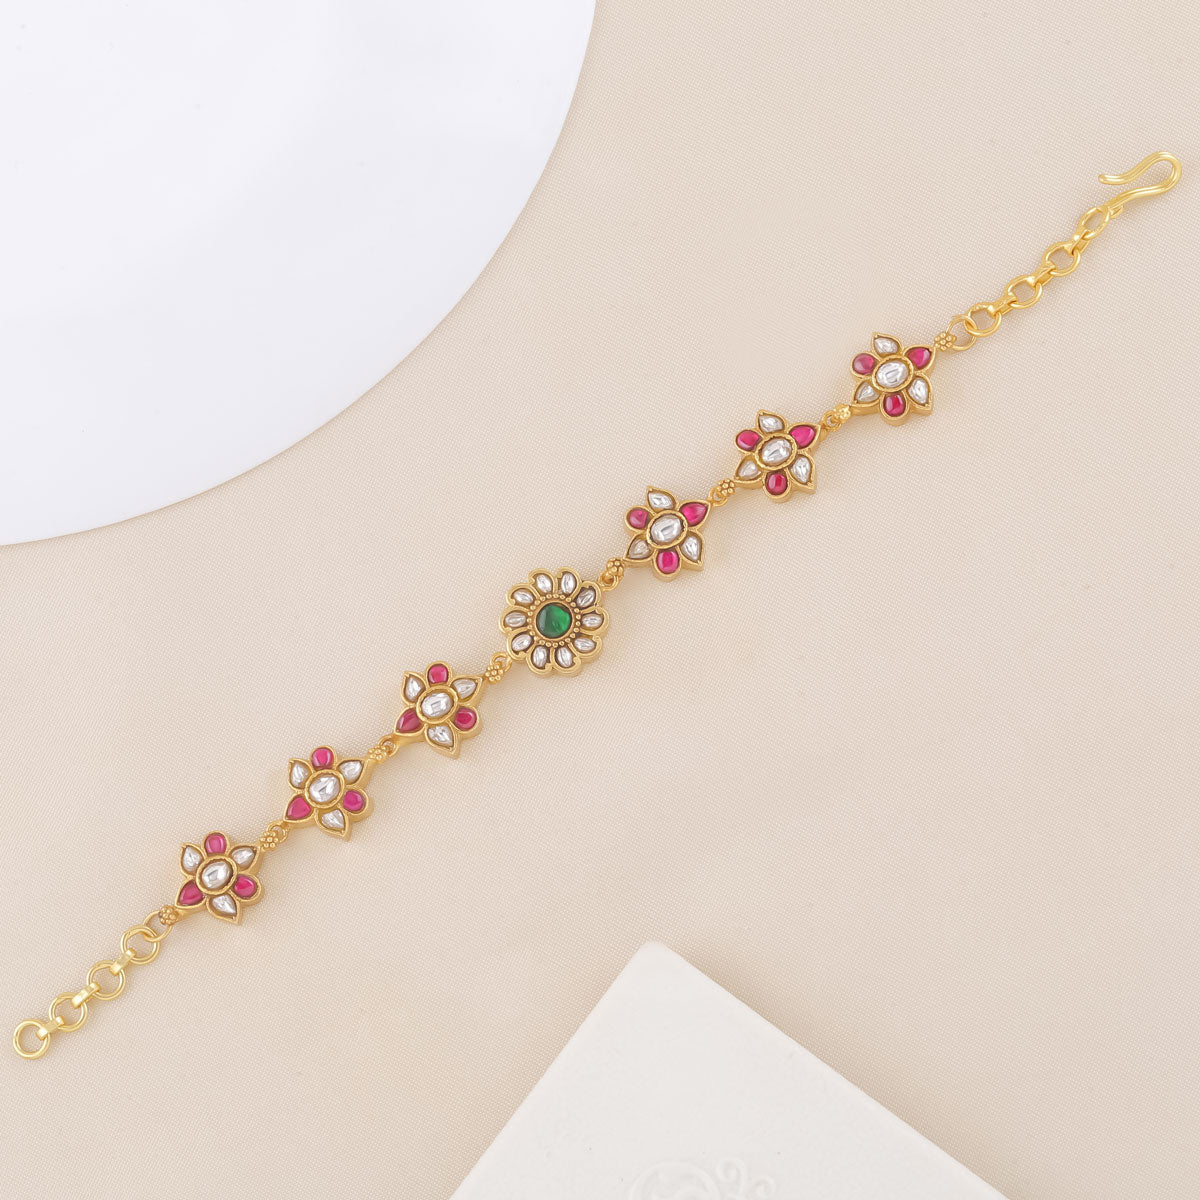 14k bracelets women jewelry accessories link| Alibaba.com